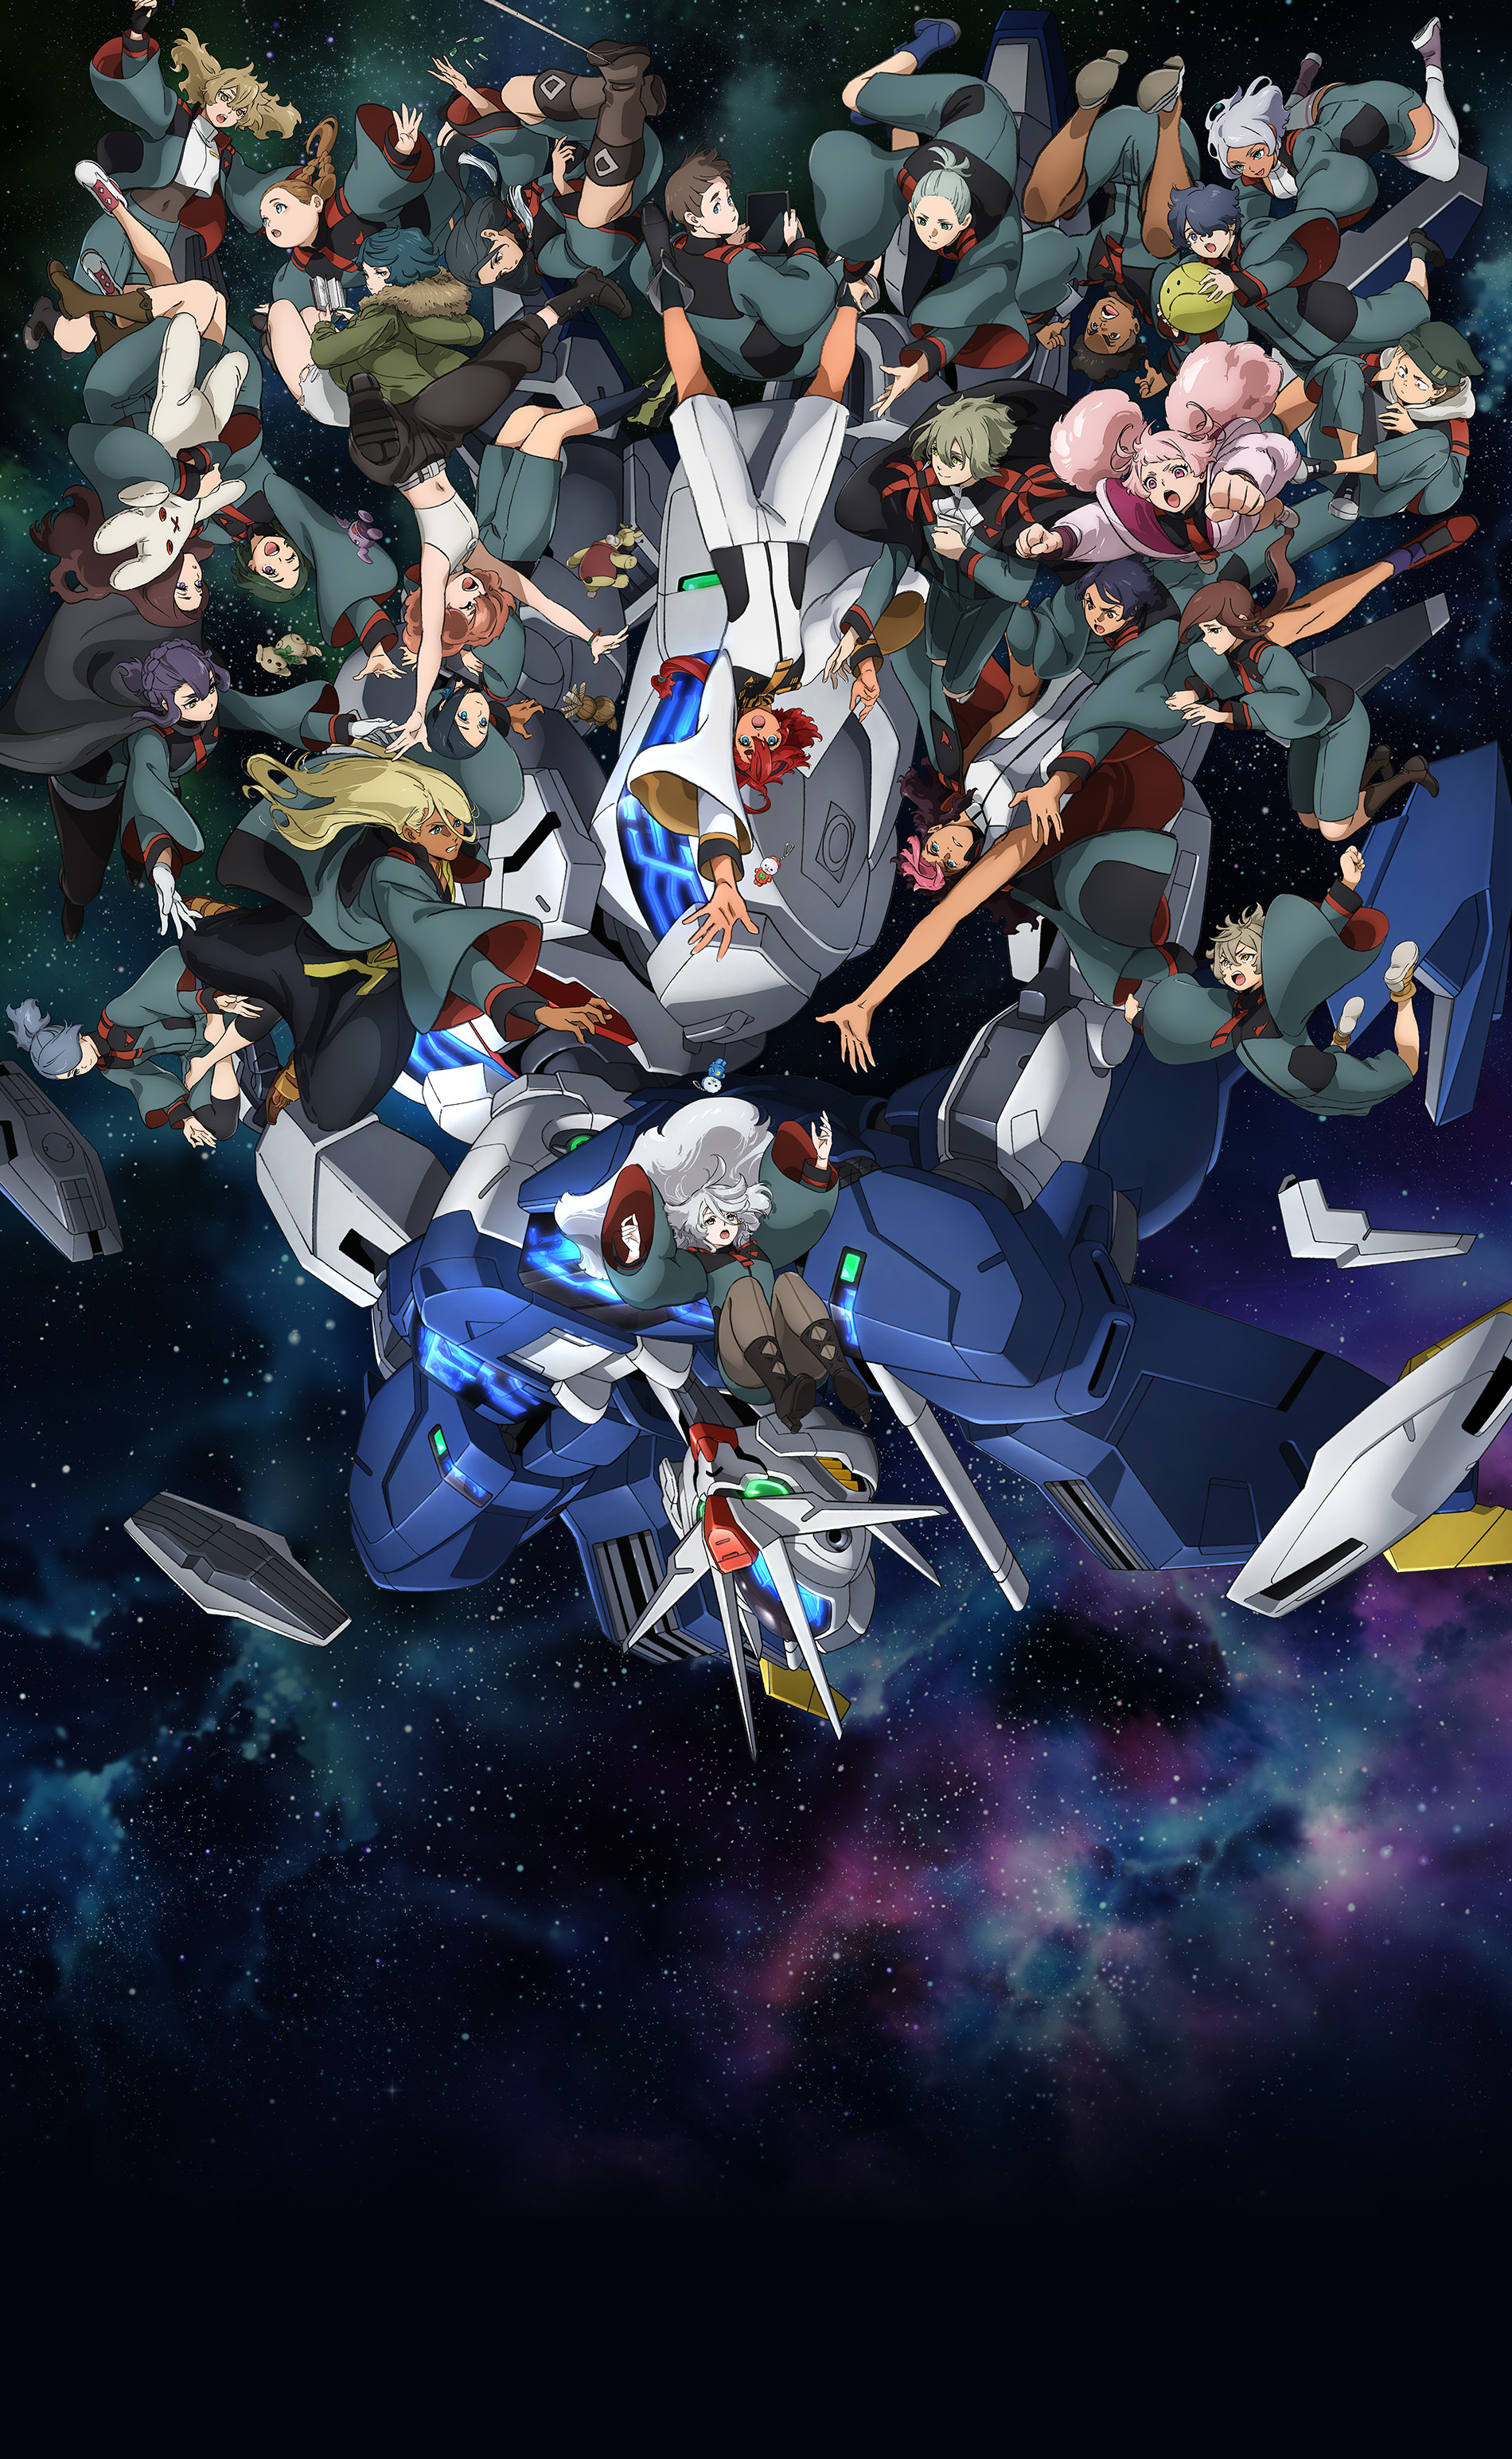 The Best Gundam Series, Ranked